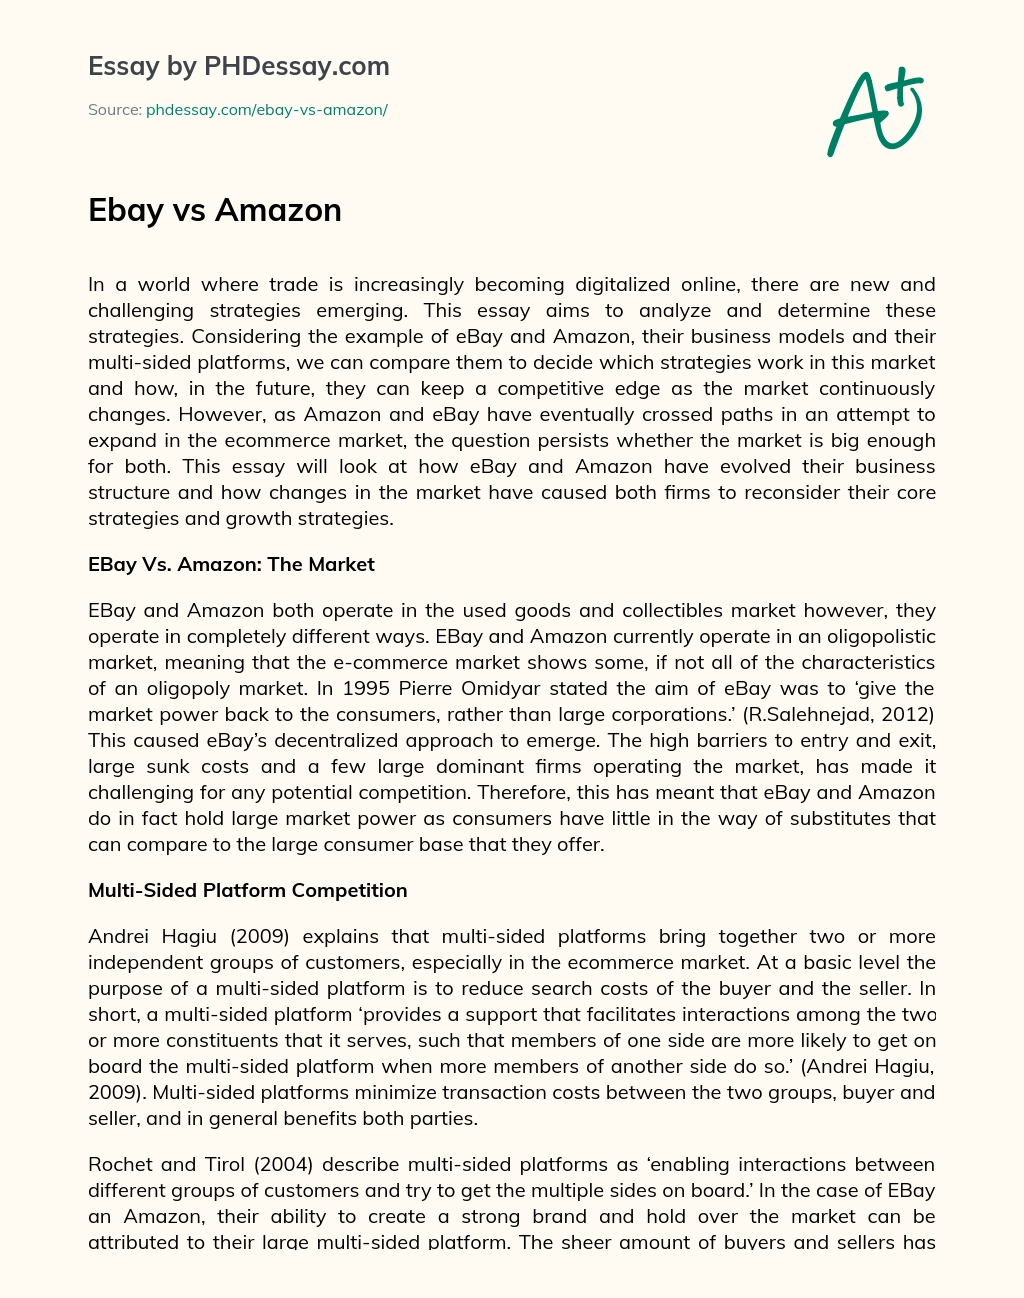 Ebay vs Amazon essay